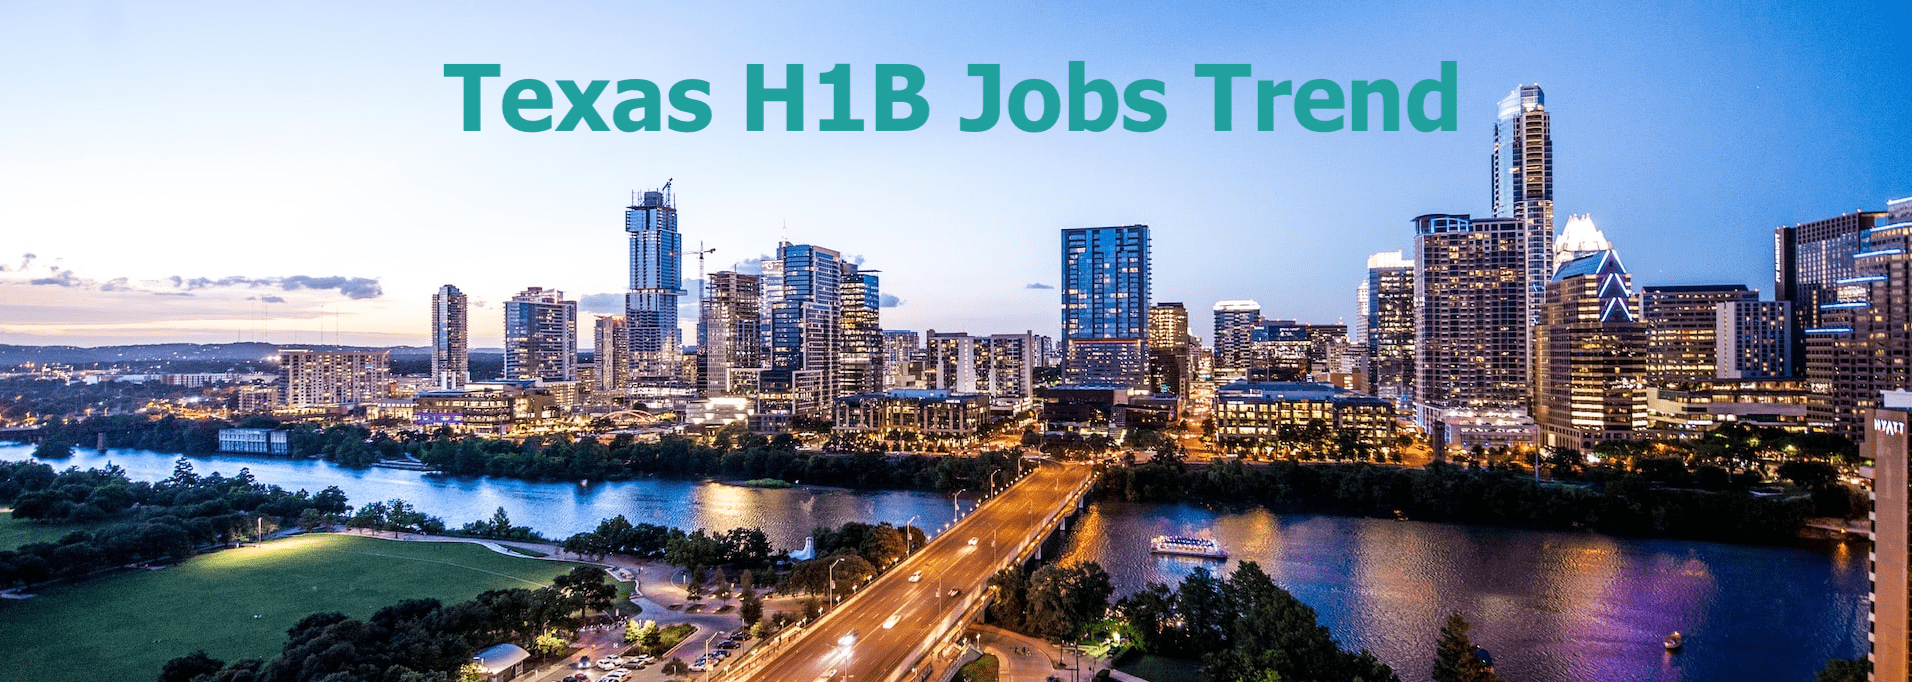 Texas H1B Jobs Trend H1bGrader.com